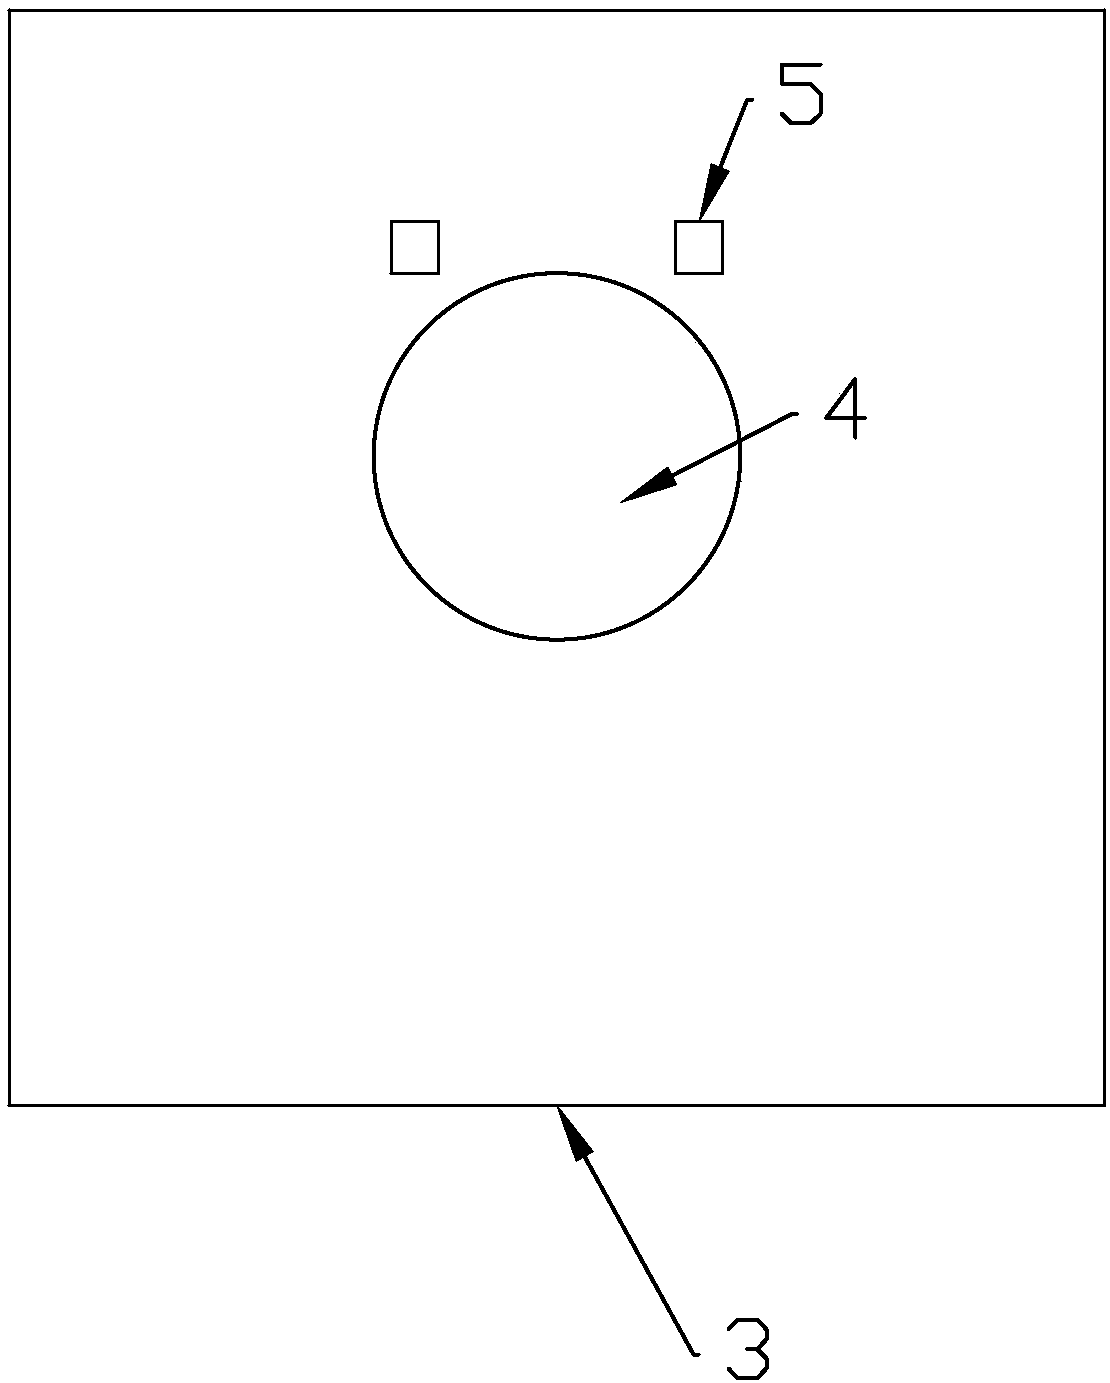 Strain gauge for limiting torsion angle